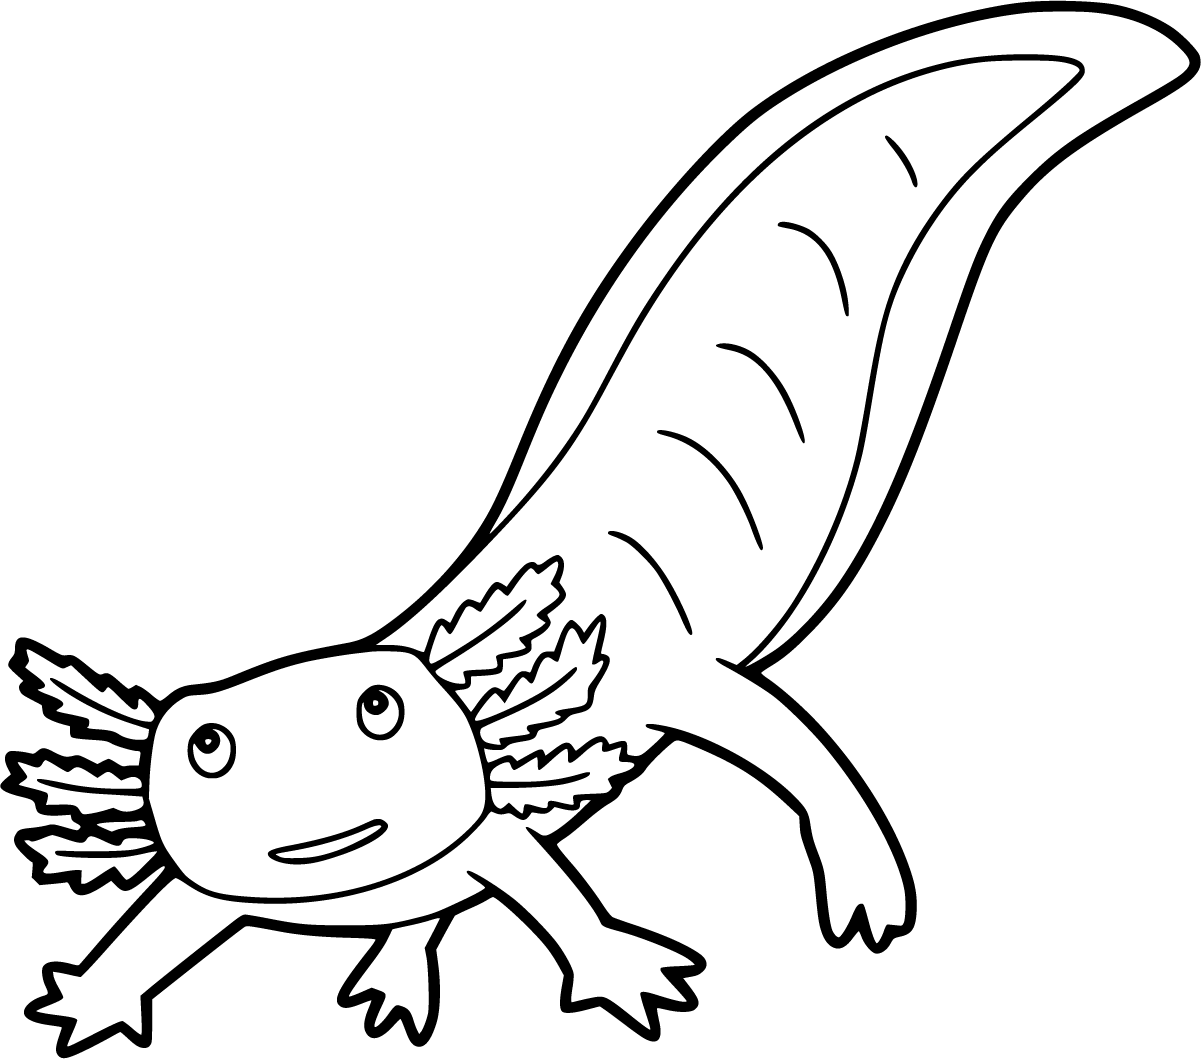 Axolotl Coloring Pages to Print - Free Axolotl Coloring Page